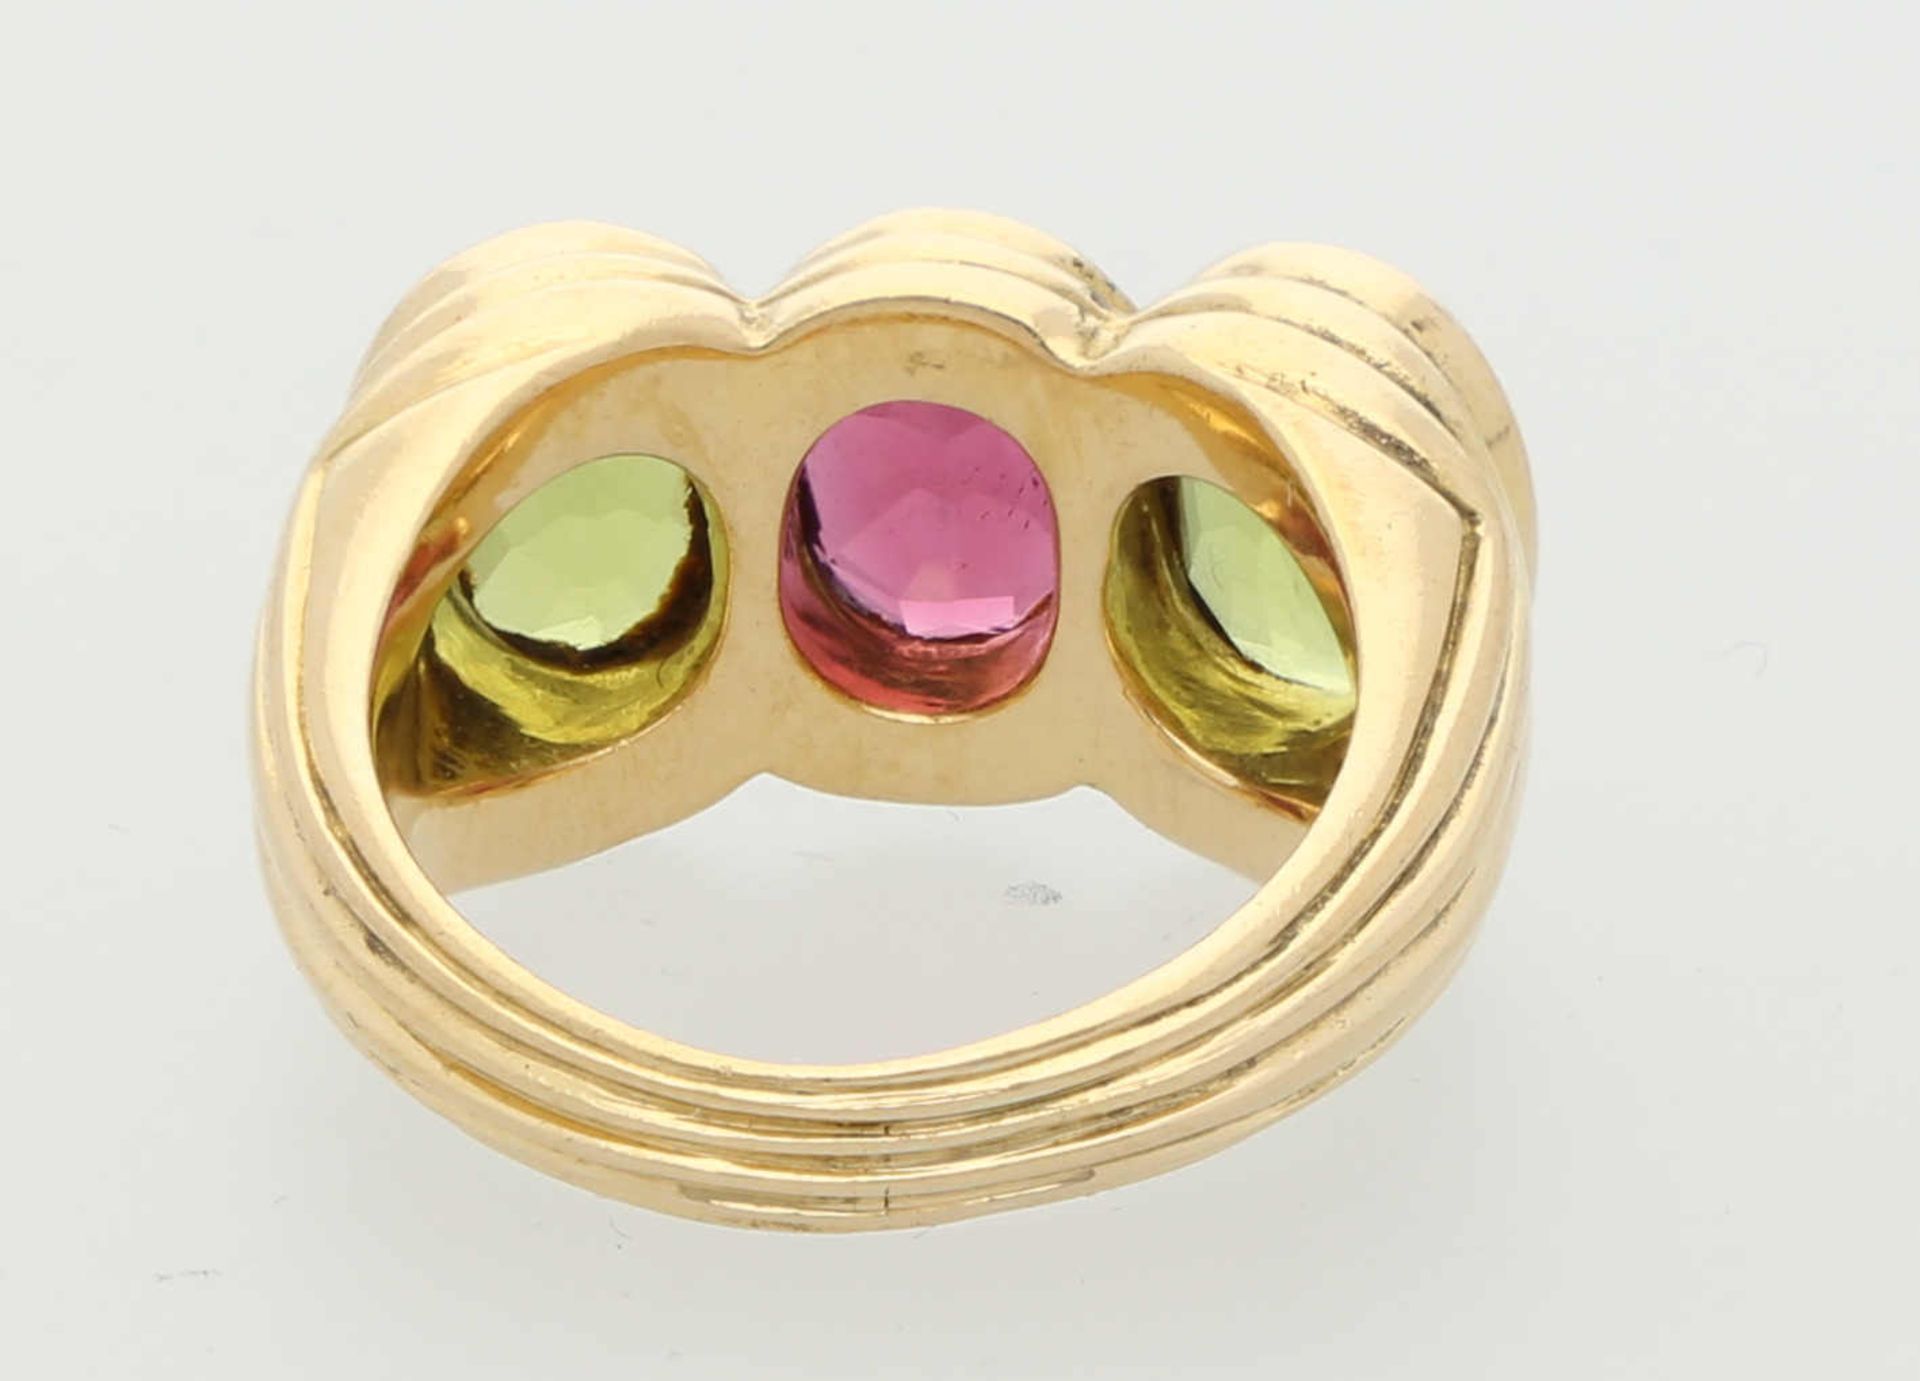 Bulgari Ring Bulgari Ring in Gelbgold 18K aus der Roma-Kollektion mit einem rosa Turmalin von ca. - Image 3 of 3